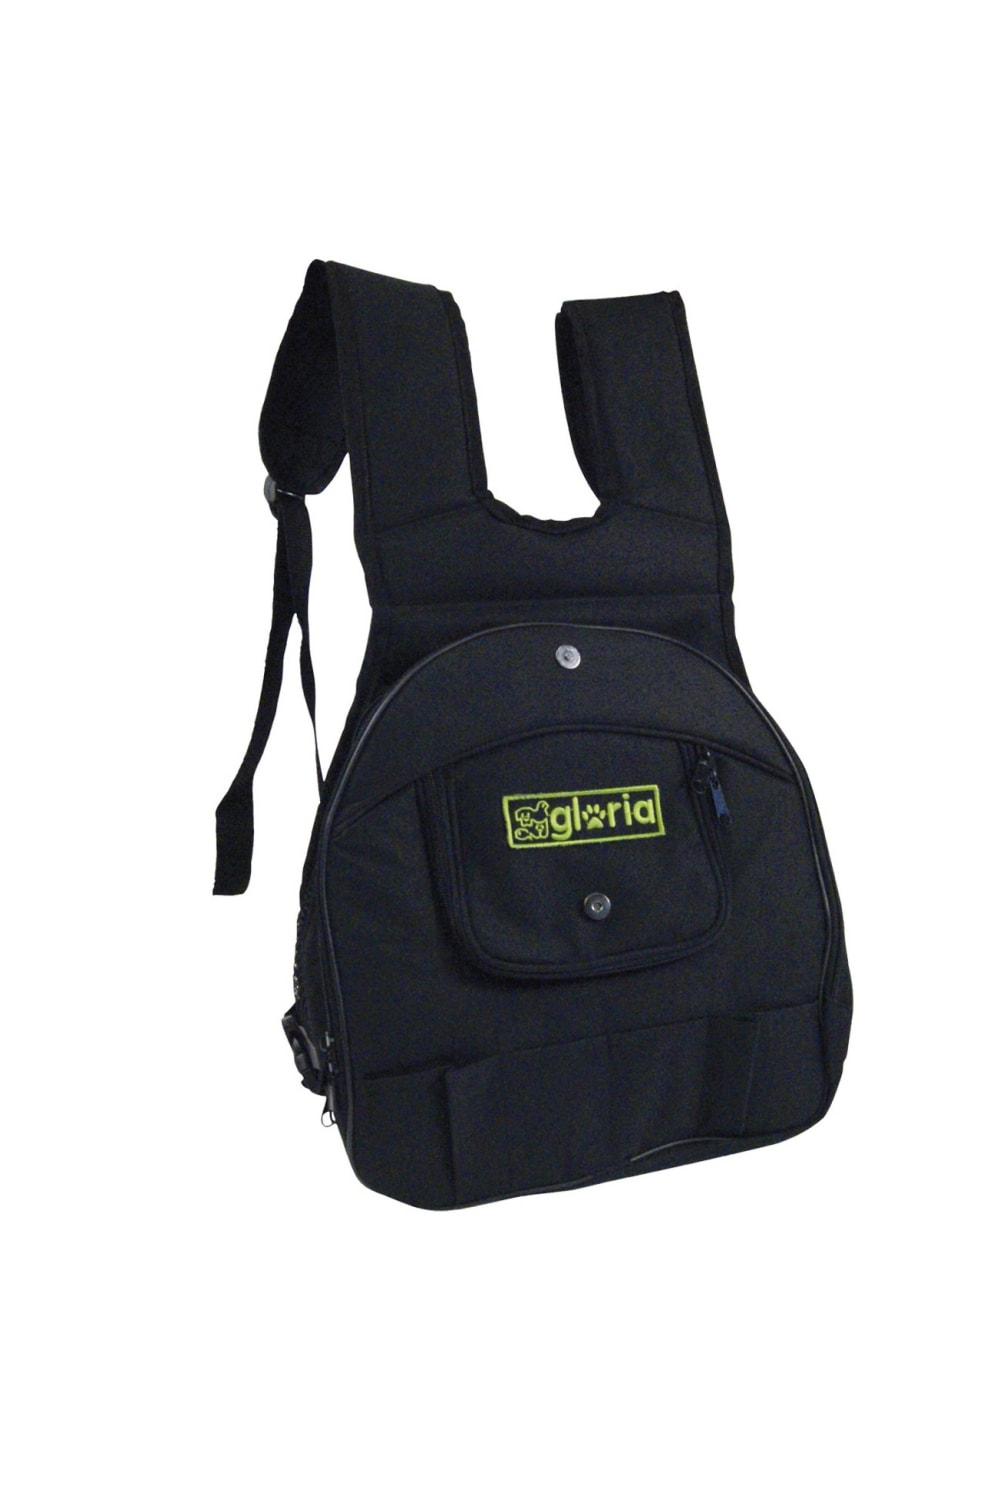 Gloria Canguro Expandable Pet Backpack (Black) (11.8 x 7.9 x 13.4in)